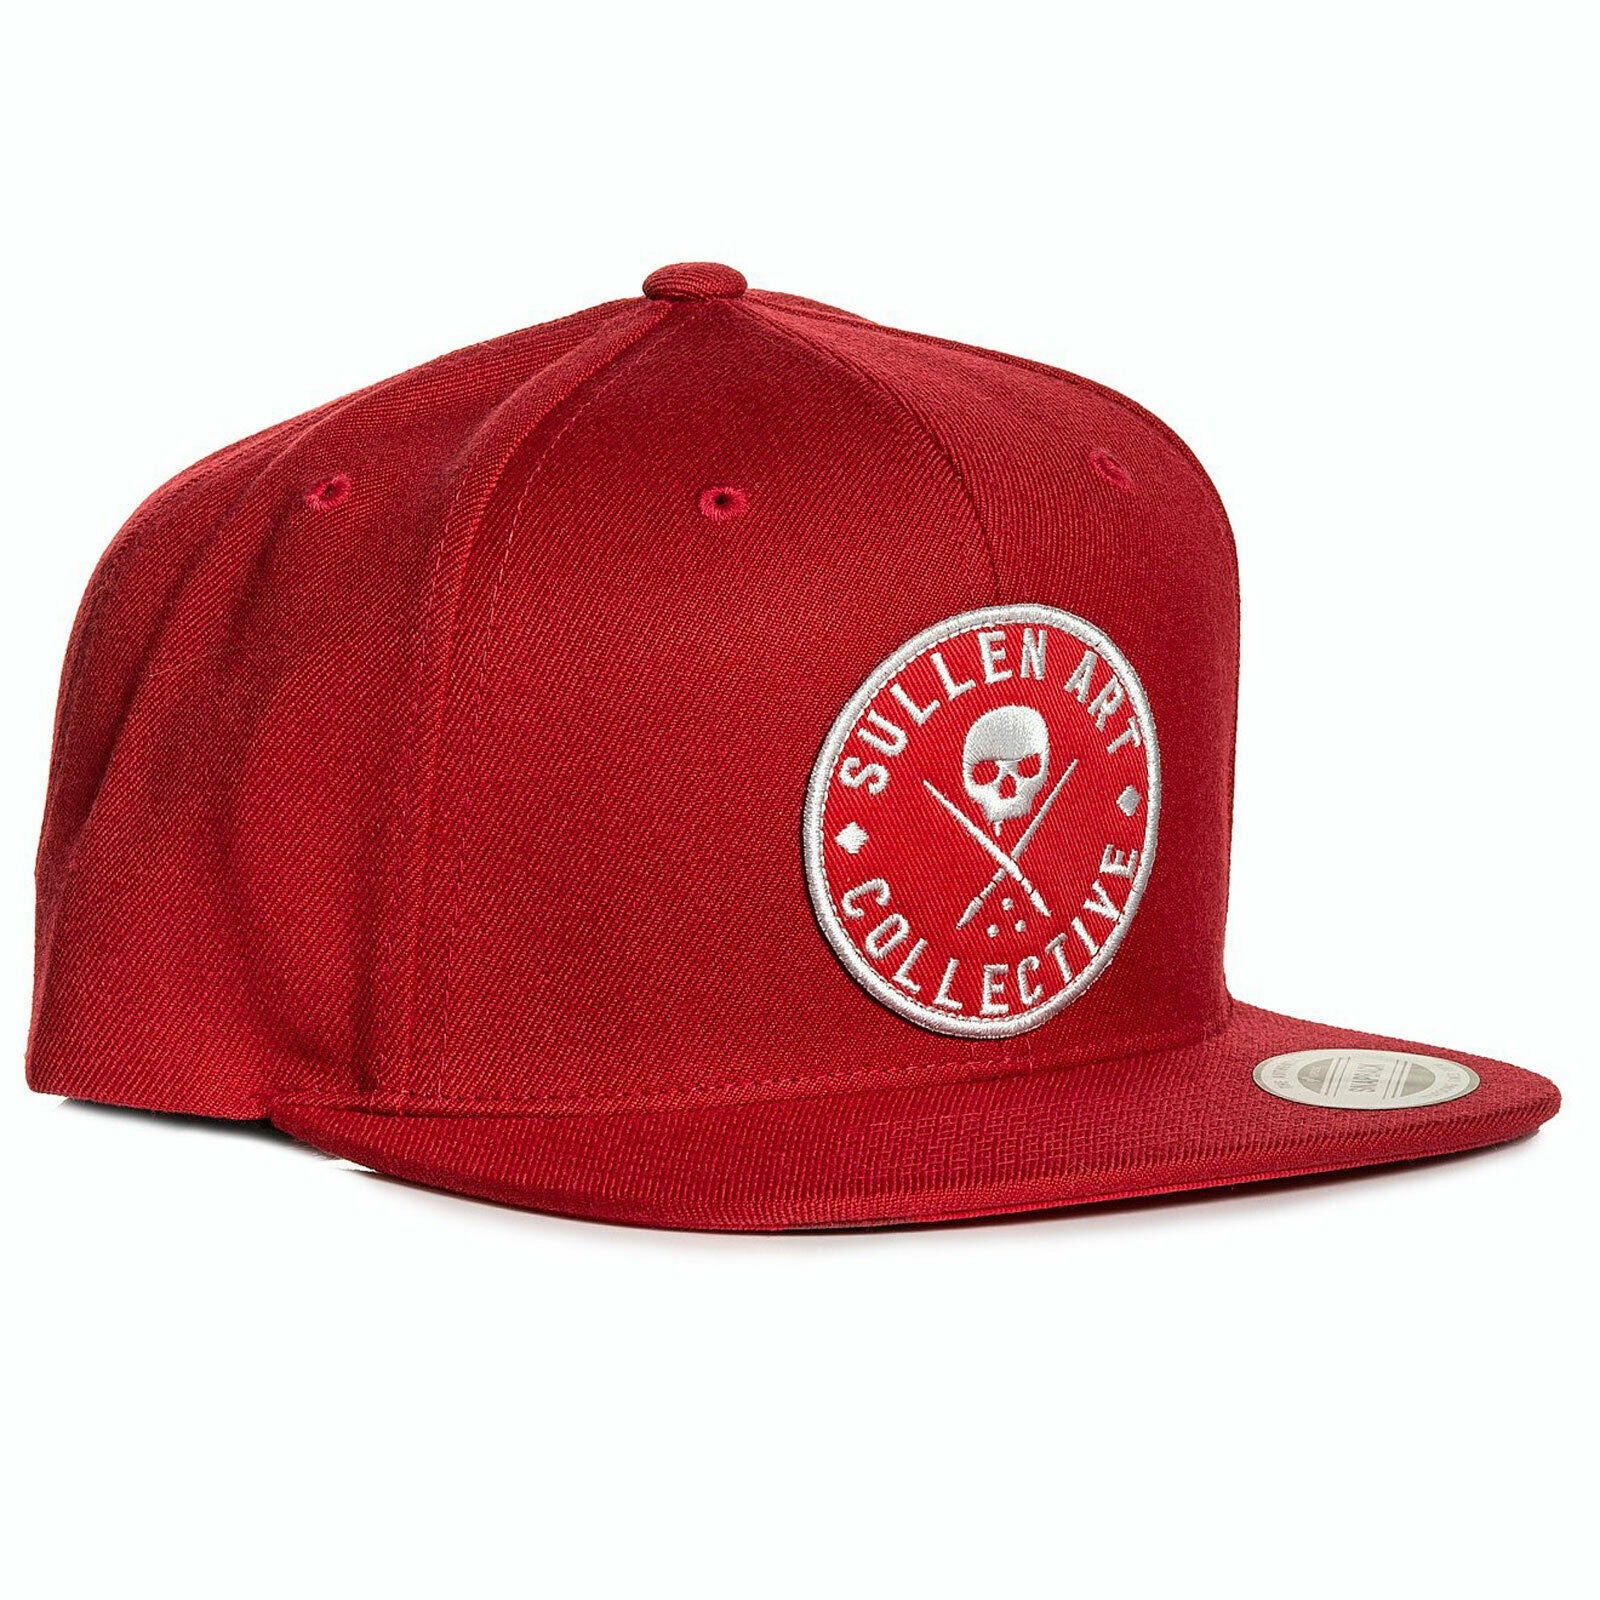 Hallmark Red Snapback Cap-Mens Beanies, Hats & Snapback Caps-Scarlett Dawn